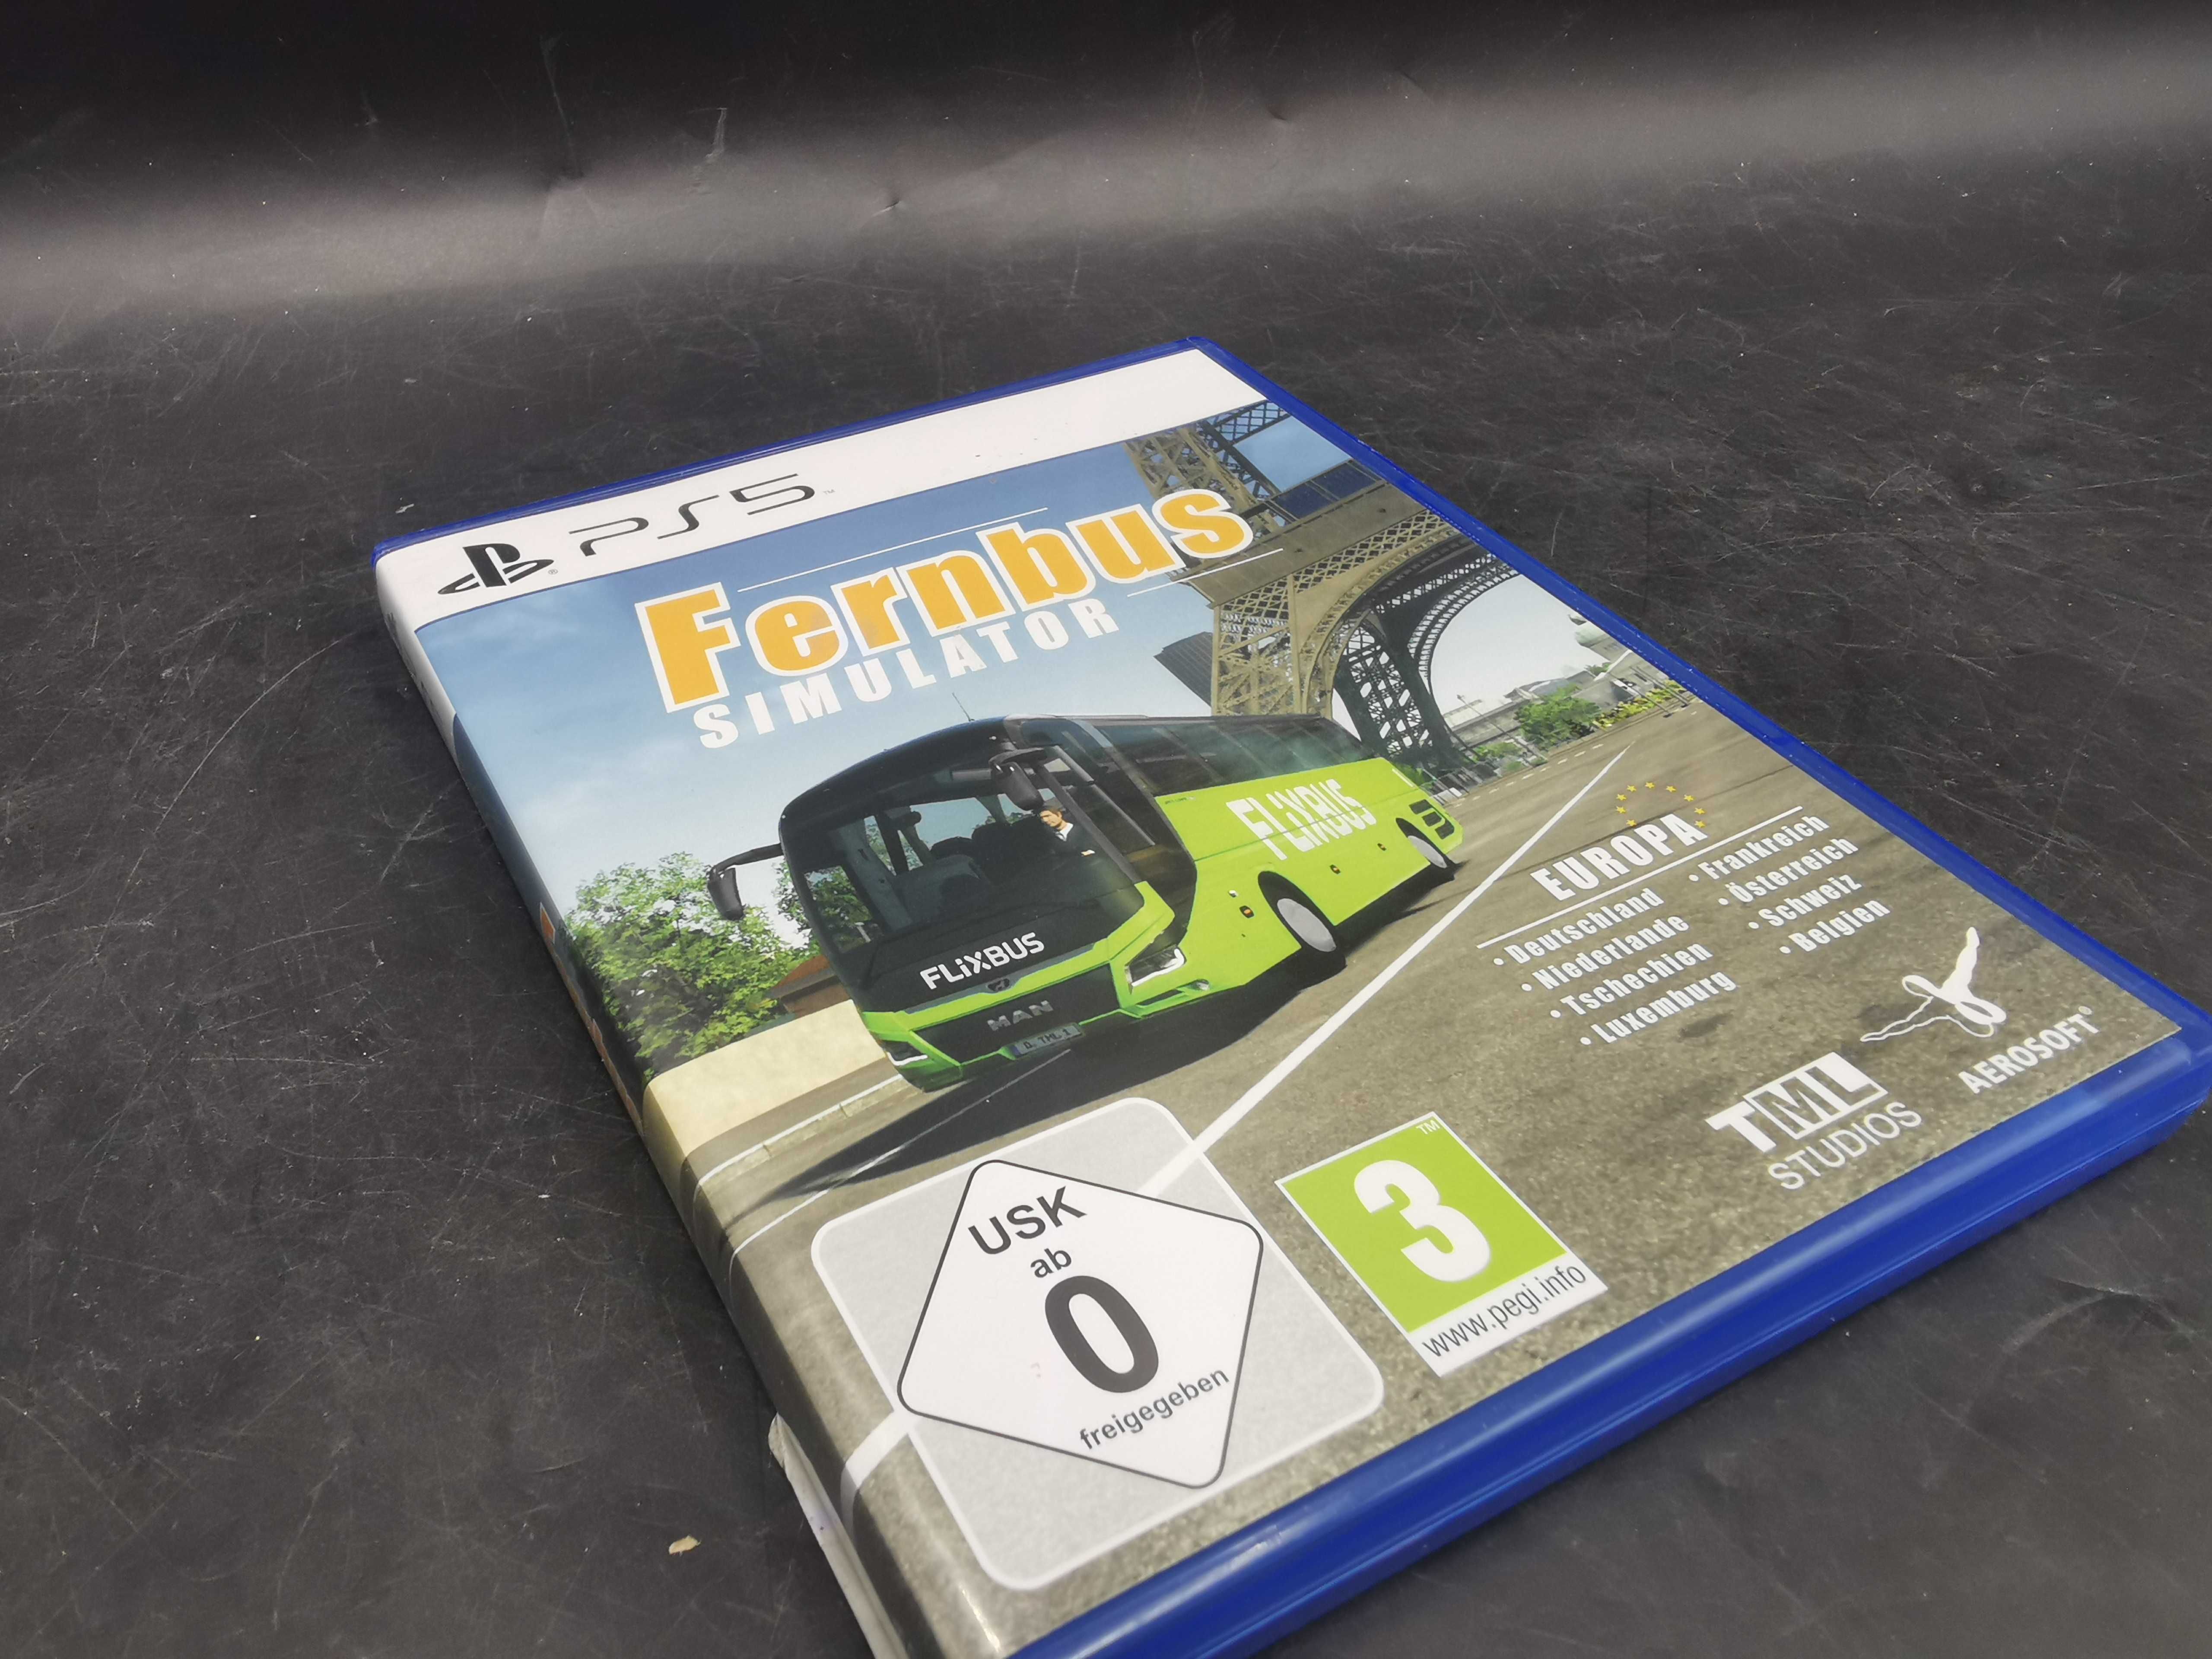 Fernbus Simulator PS5 Gra na Konsole Playstation 5